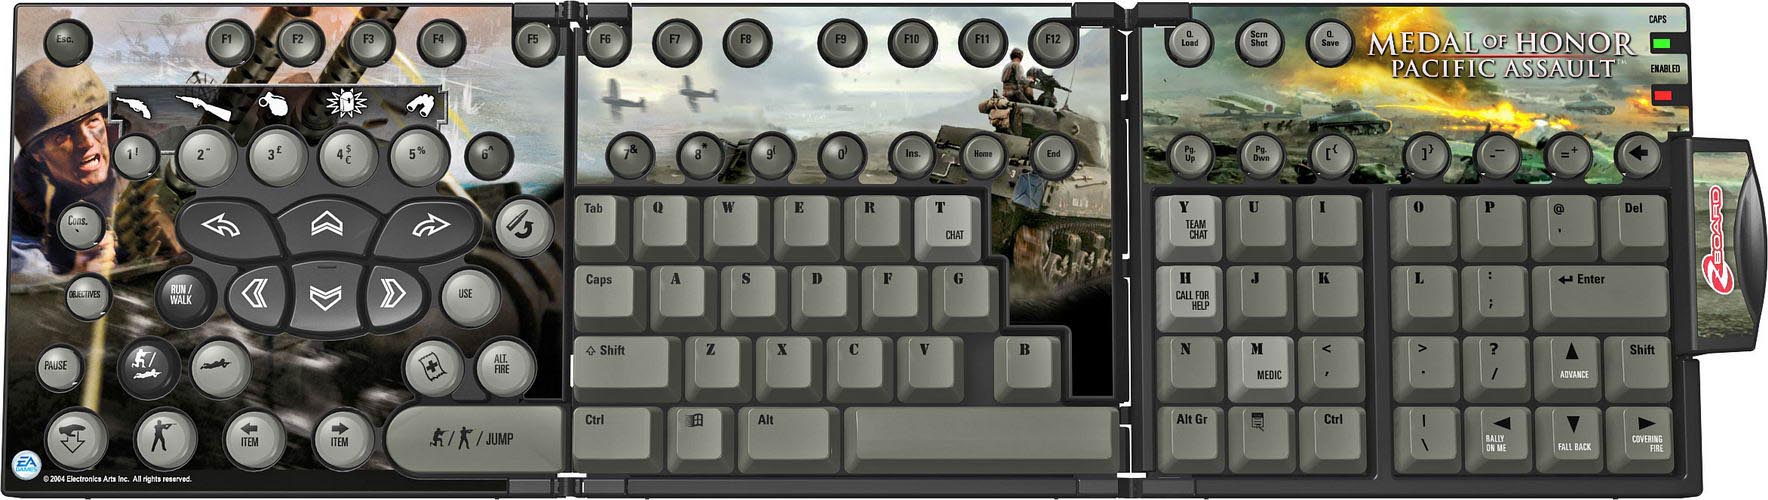 Zboard, накладка на клавиатуру Medal of Honor Pacific Assault, En Ideazon Inc Предназначен для: Zboard Gaming Keyboard (ZBD101/USB), Ru инфо 771c.